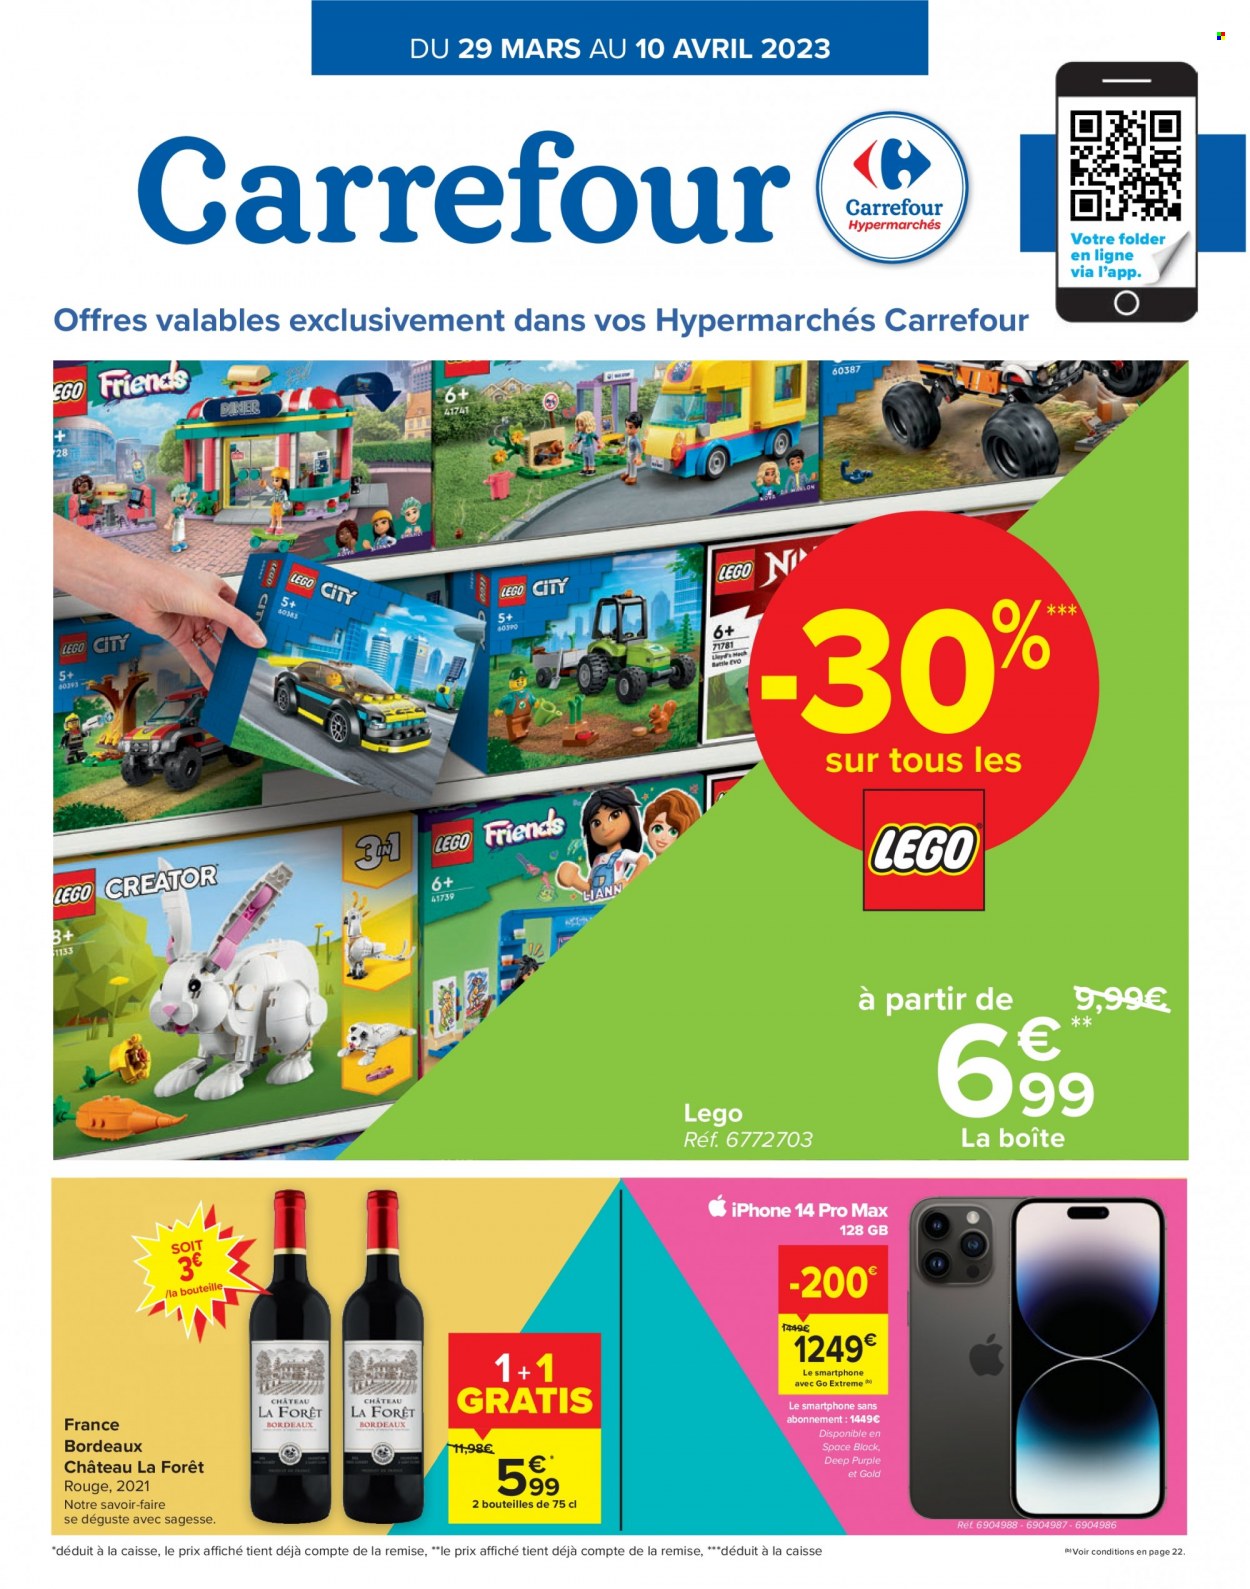 thumbnail - Carrefour hypermarkt-aanbieding - 29/03/2023 - 10/04/2023 -  producten in de aanbieding - Bordeaux, smartphone, iPhone, LEGO, LEGO City, LEGO Creator, LEGO Friends. Pagina 1.